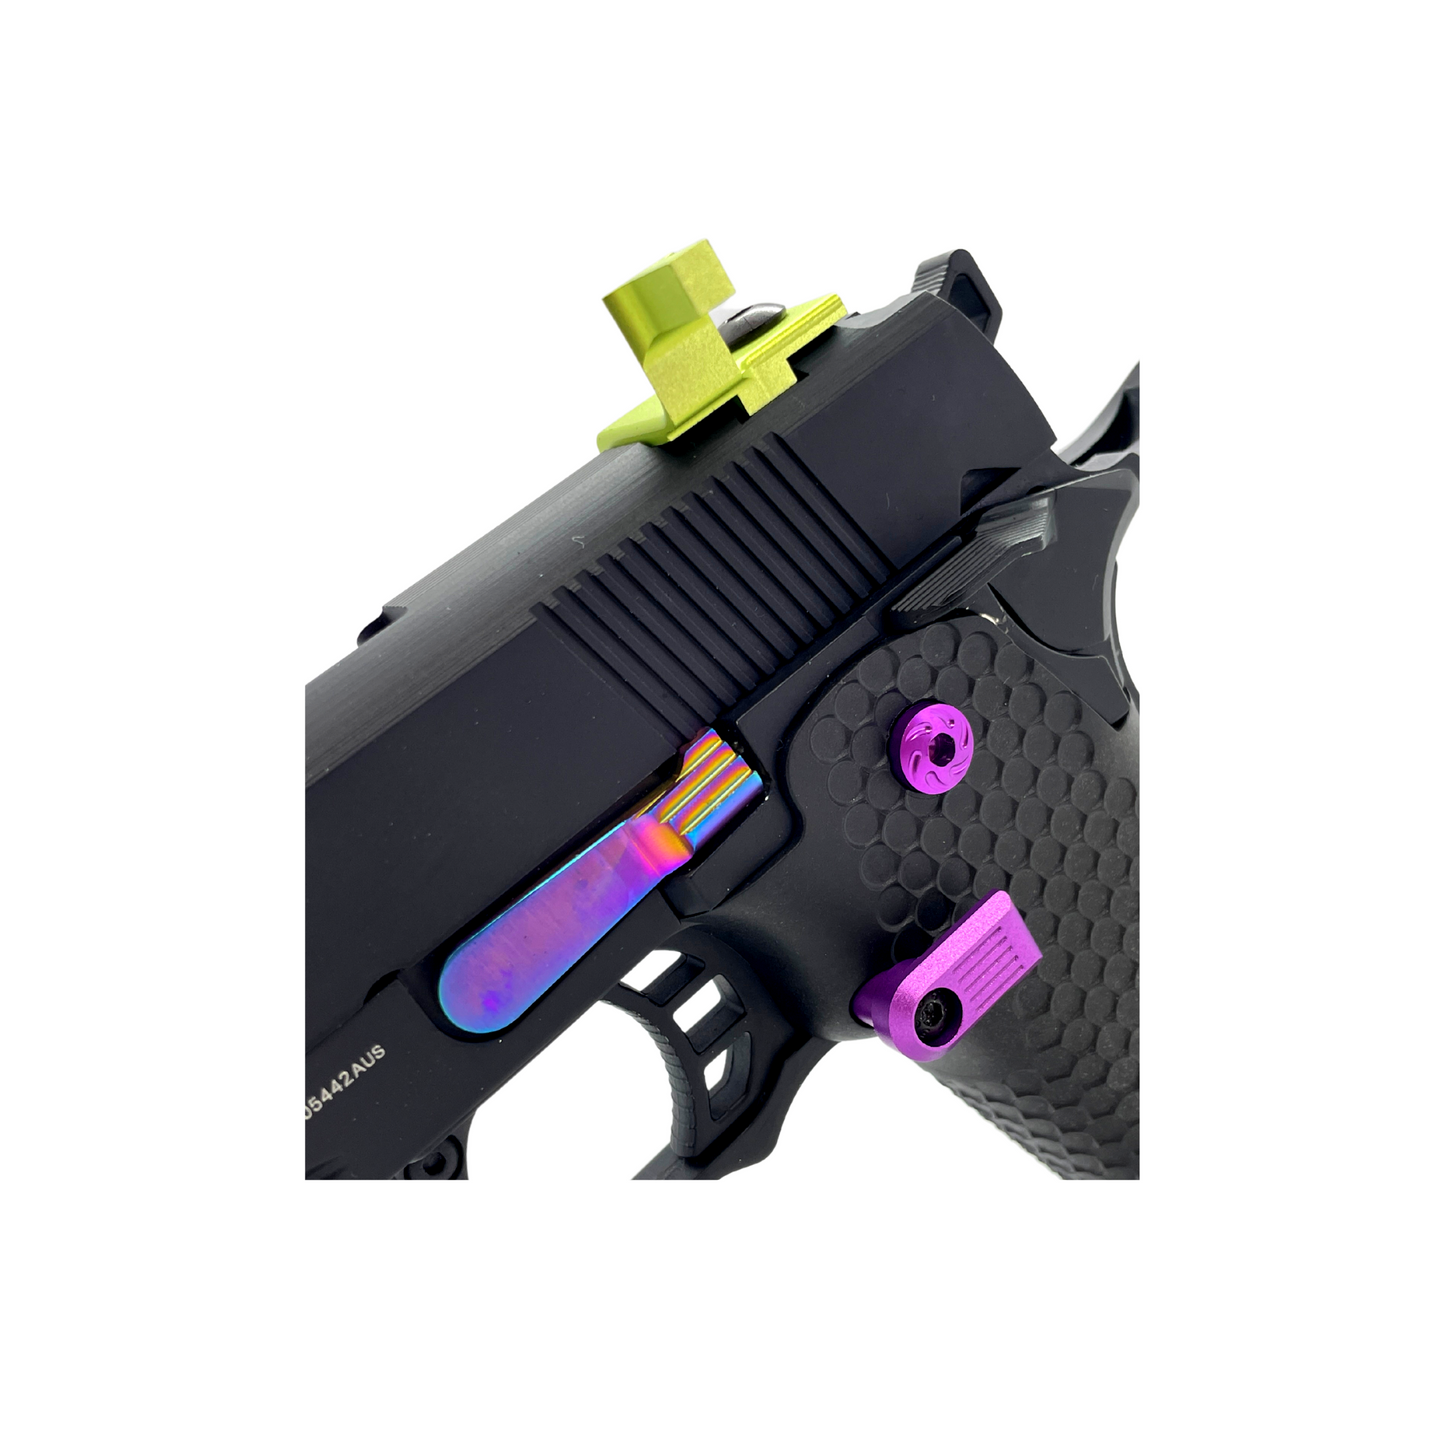 "Jokers Paradise" Custom GBU Hi-Capa 5.1 Gas Pistol - Gel Blaster